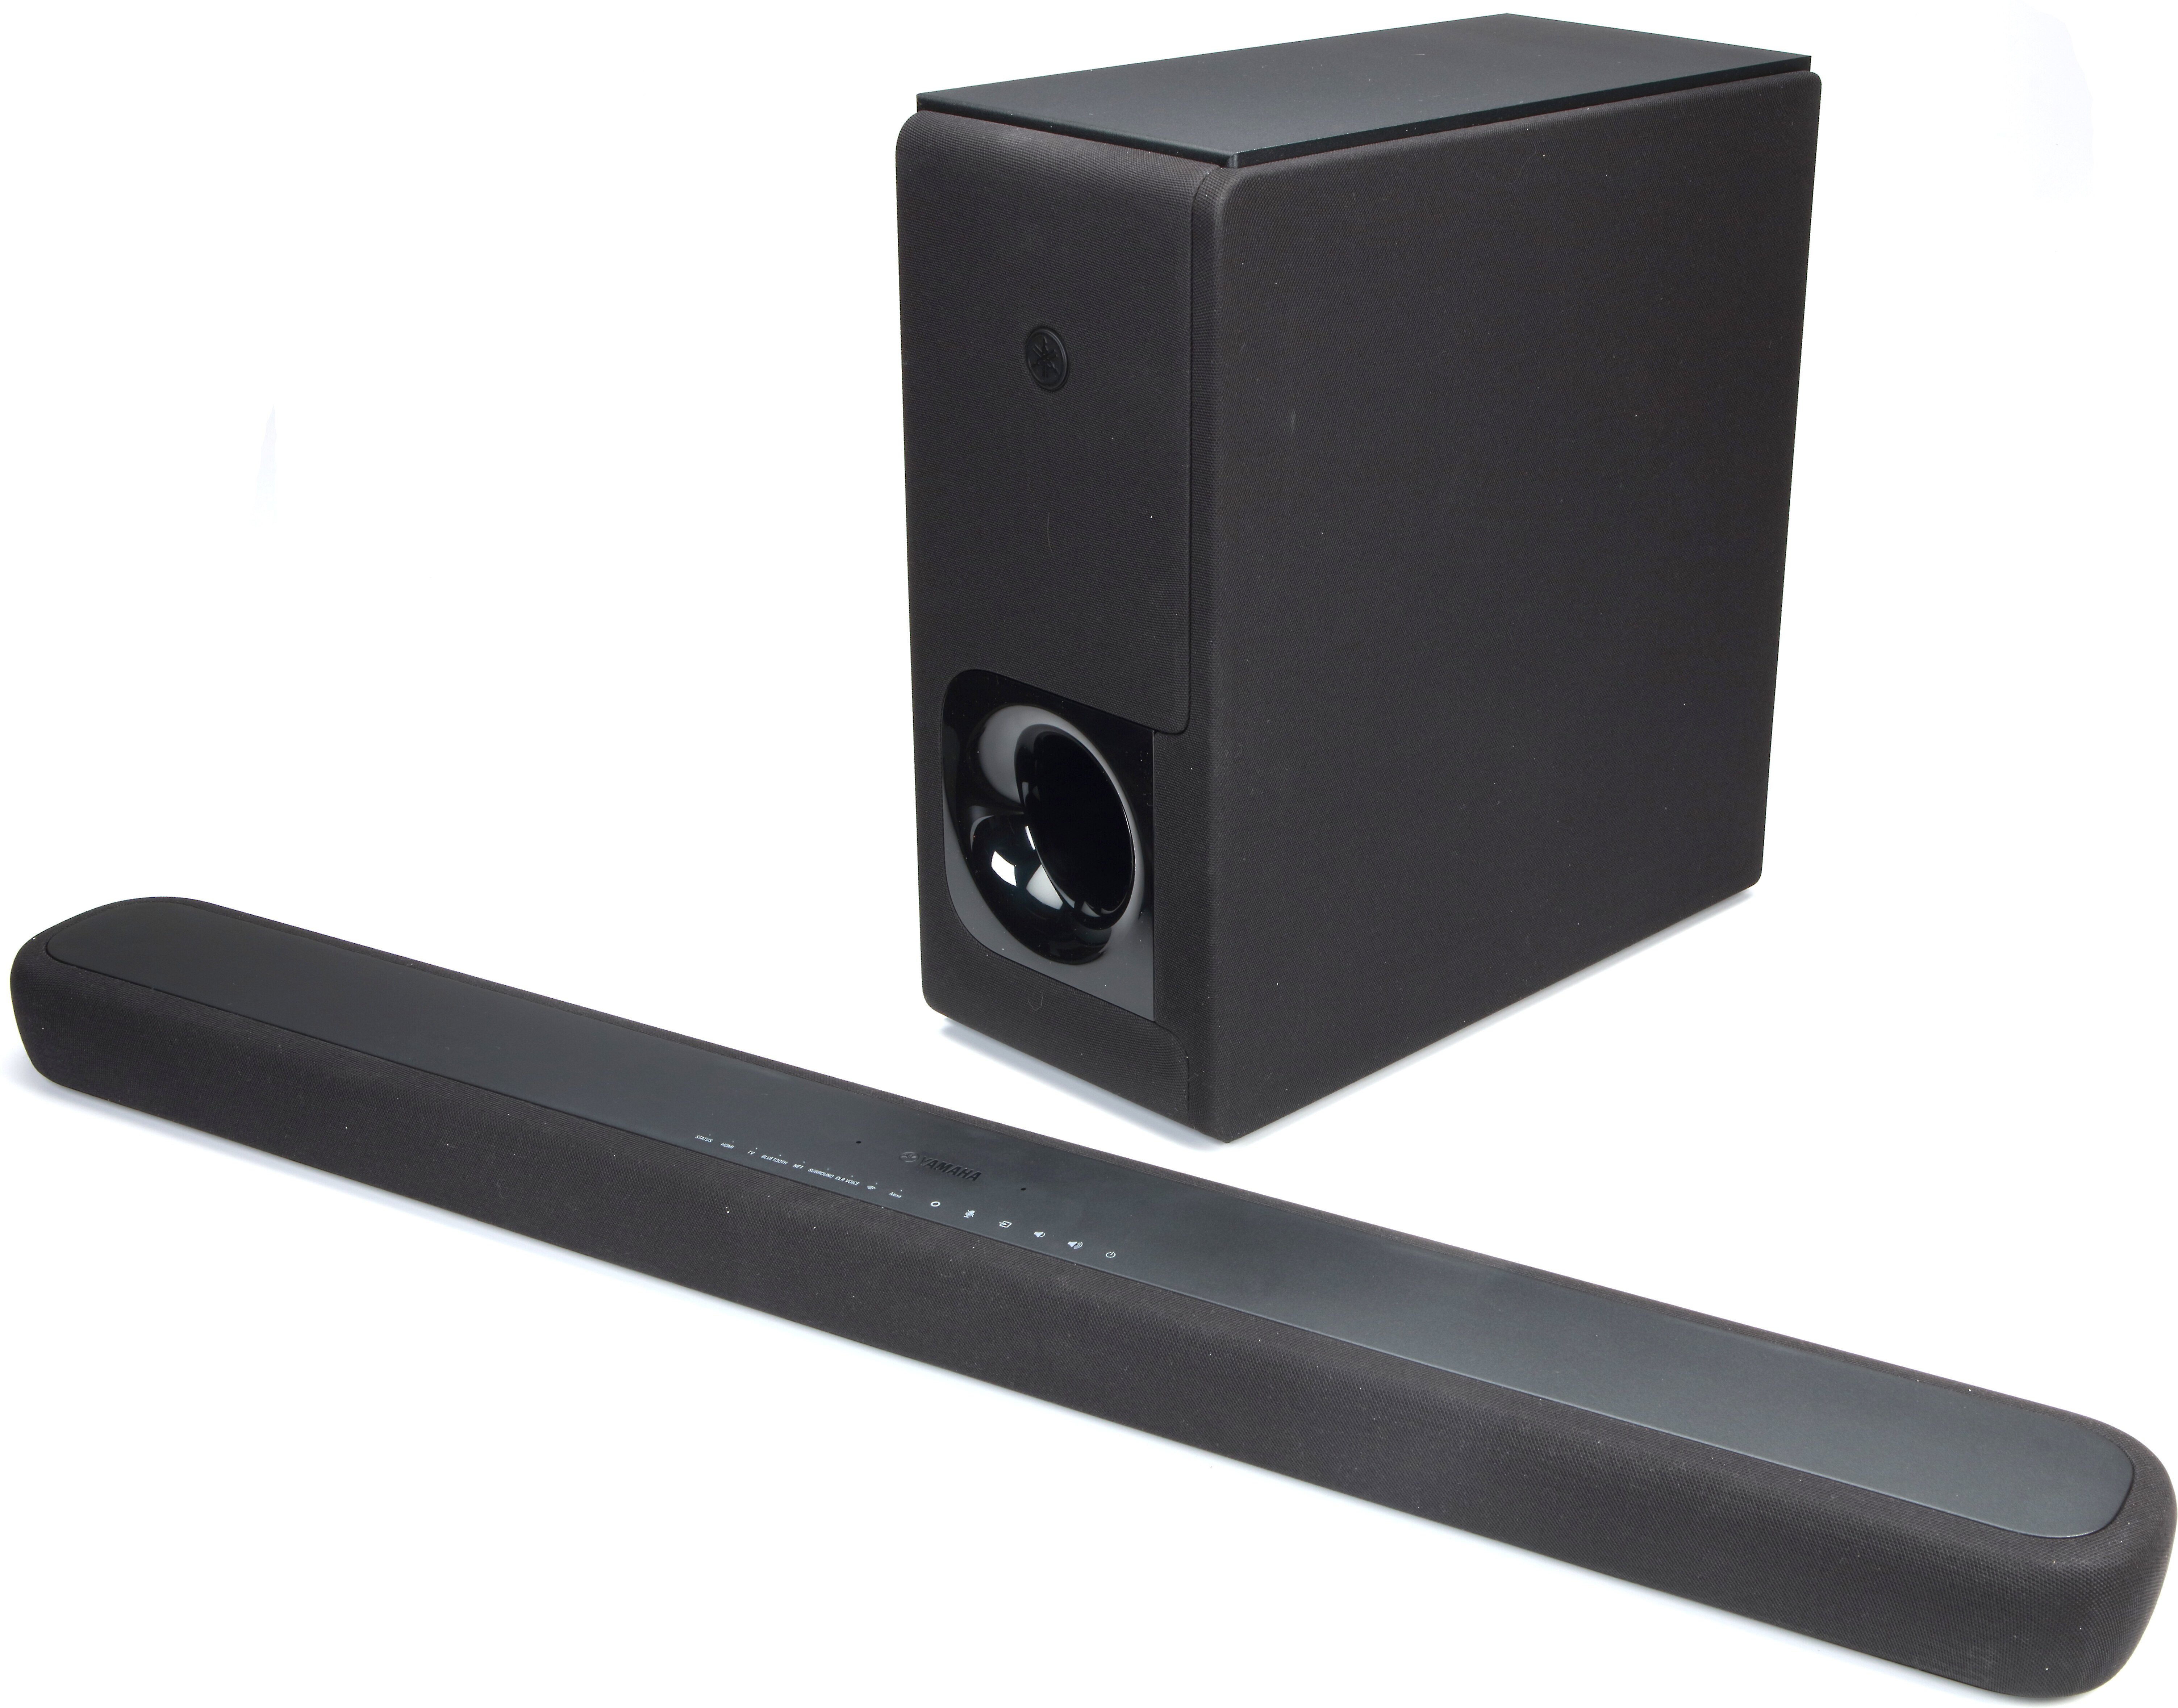 Customer Reviews: Yamaha YAS-209 Powered 2.1-channel sound bar and